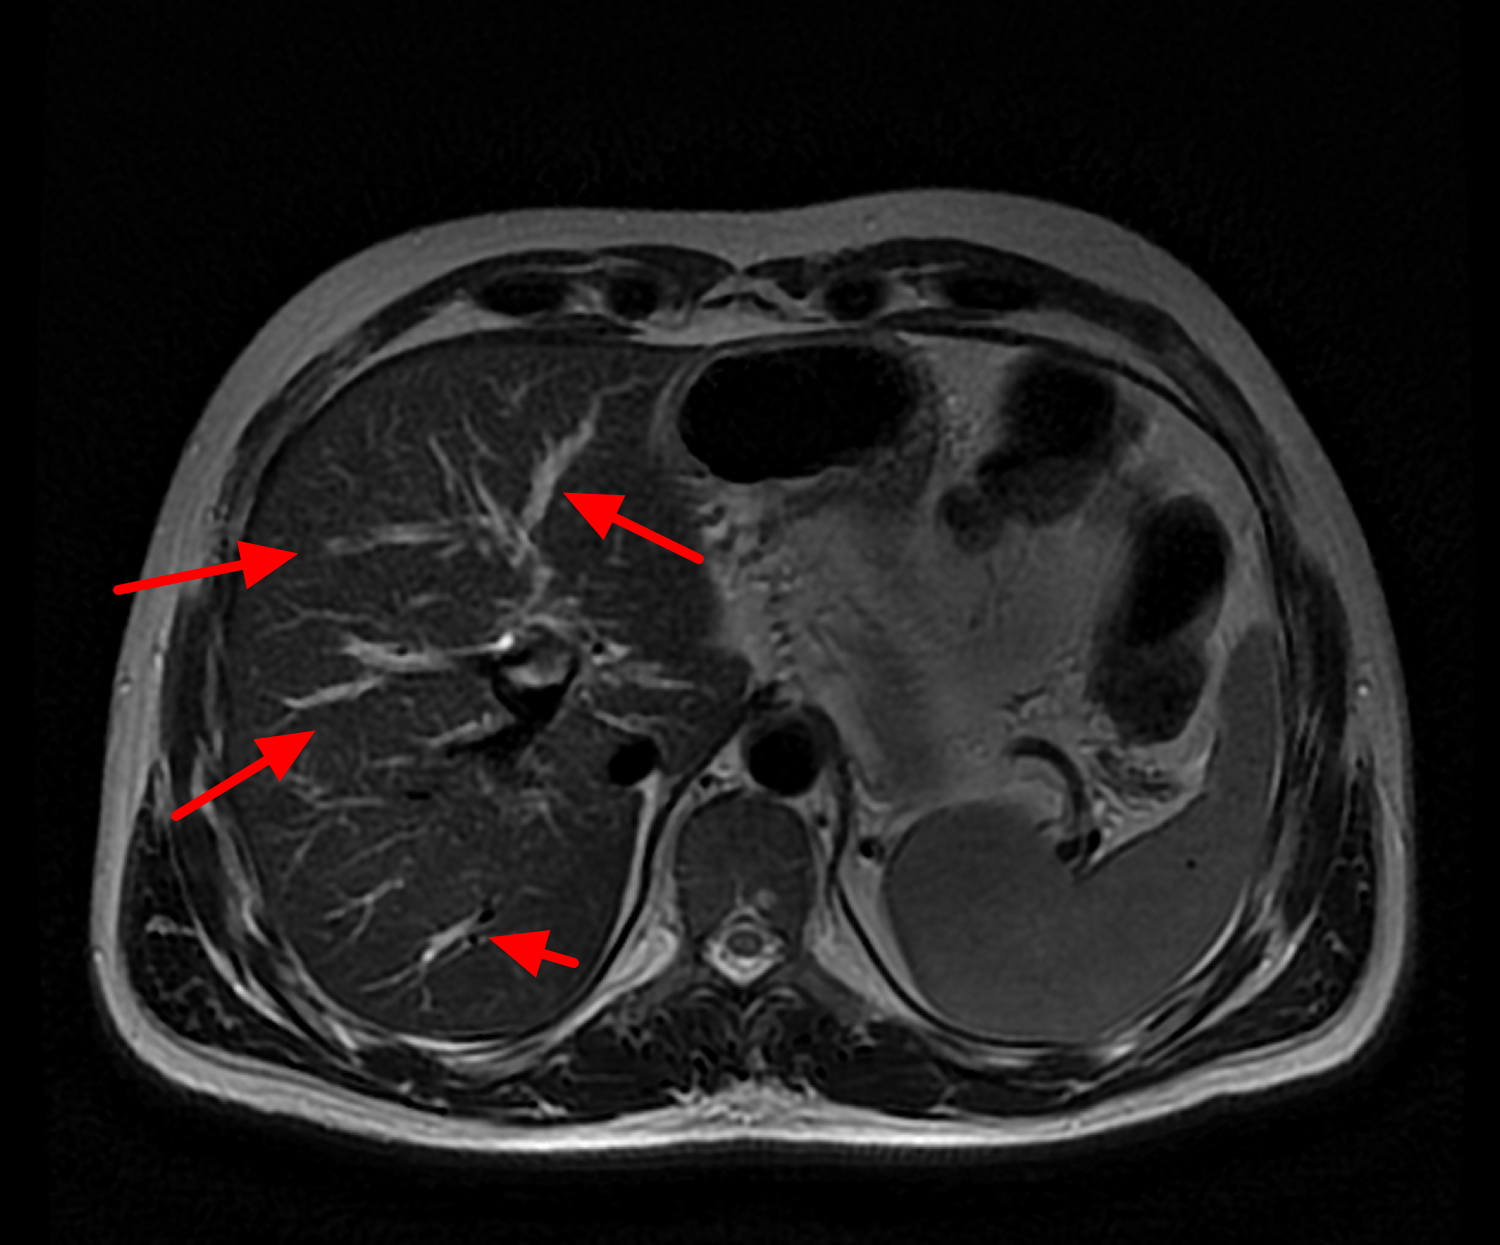 primary sclerosing cholangitis - MRI